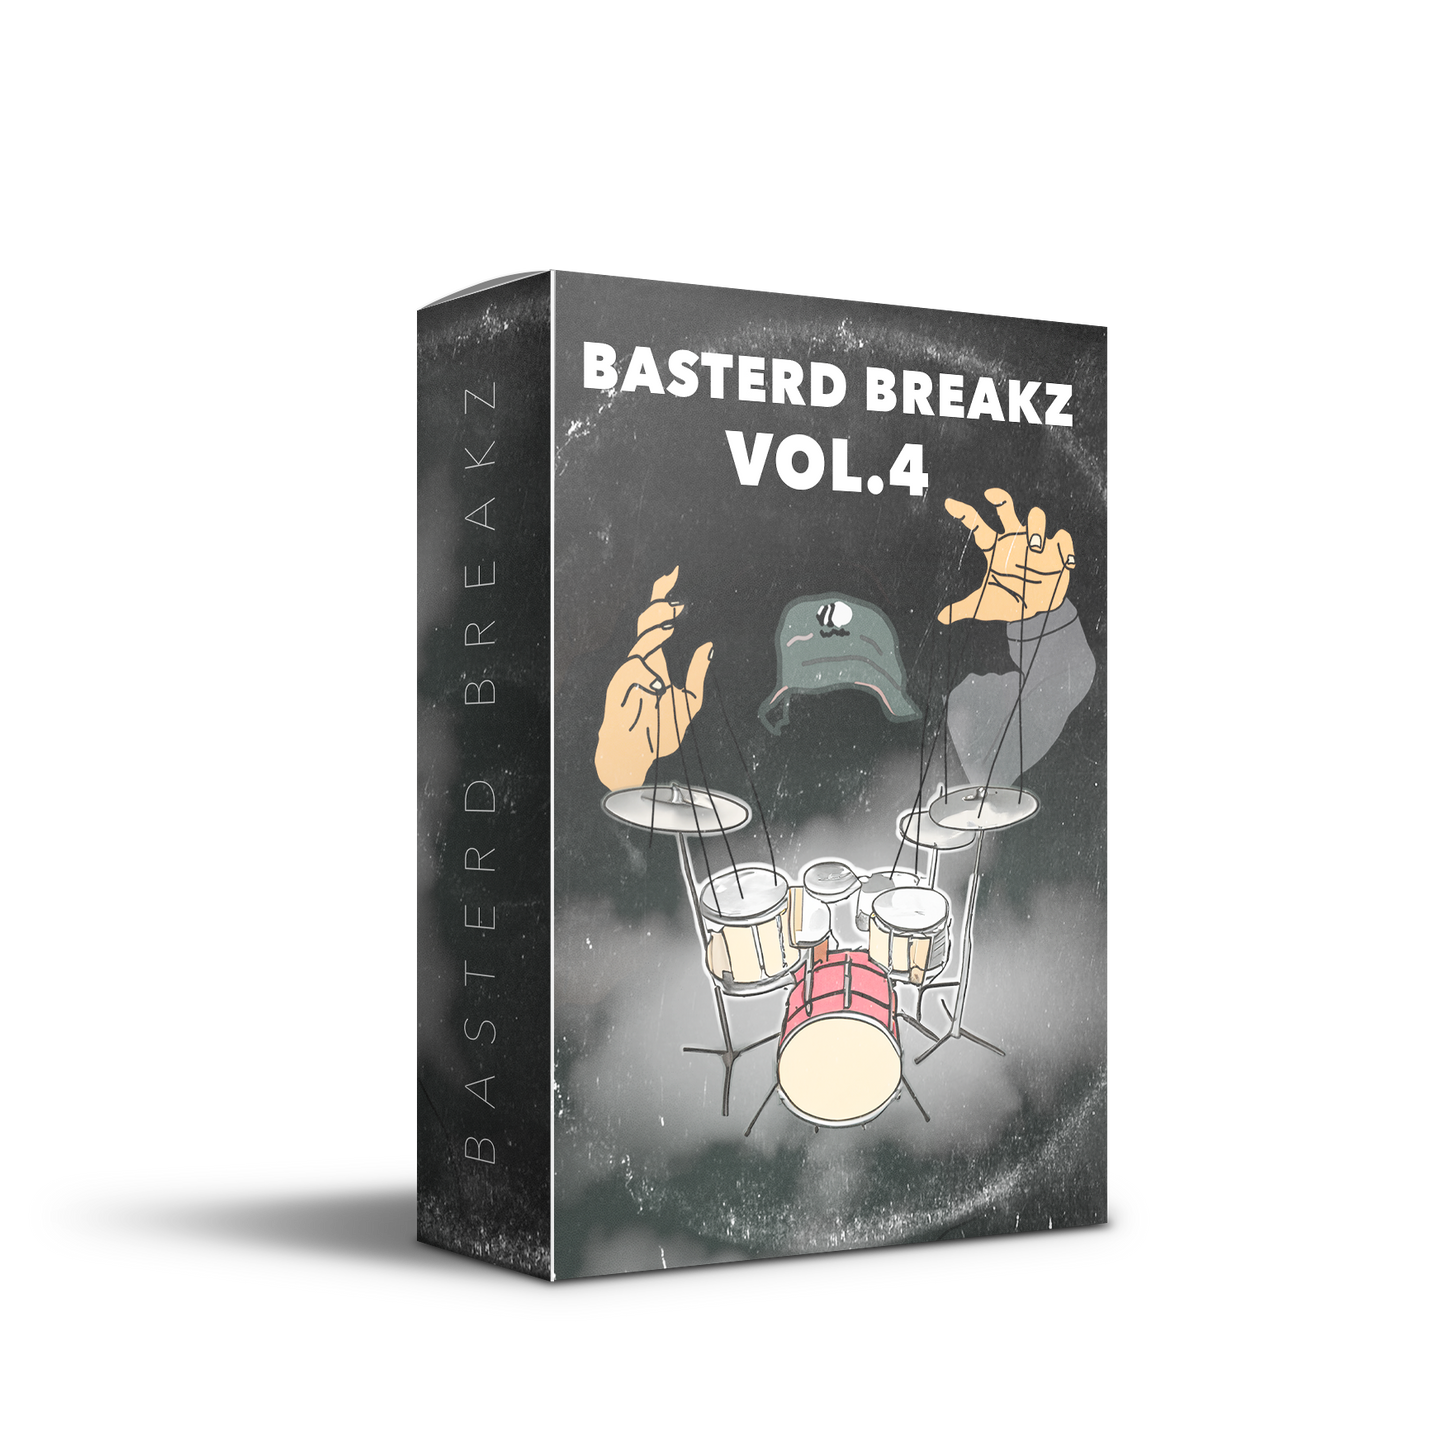 Basterd Breakz Vol. 4